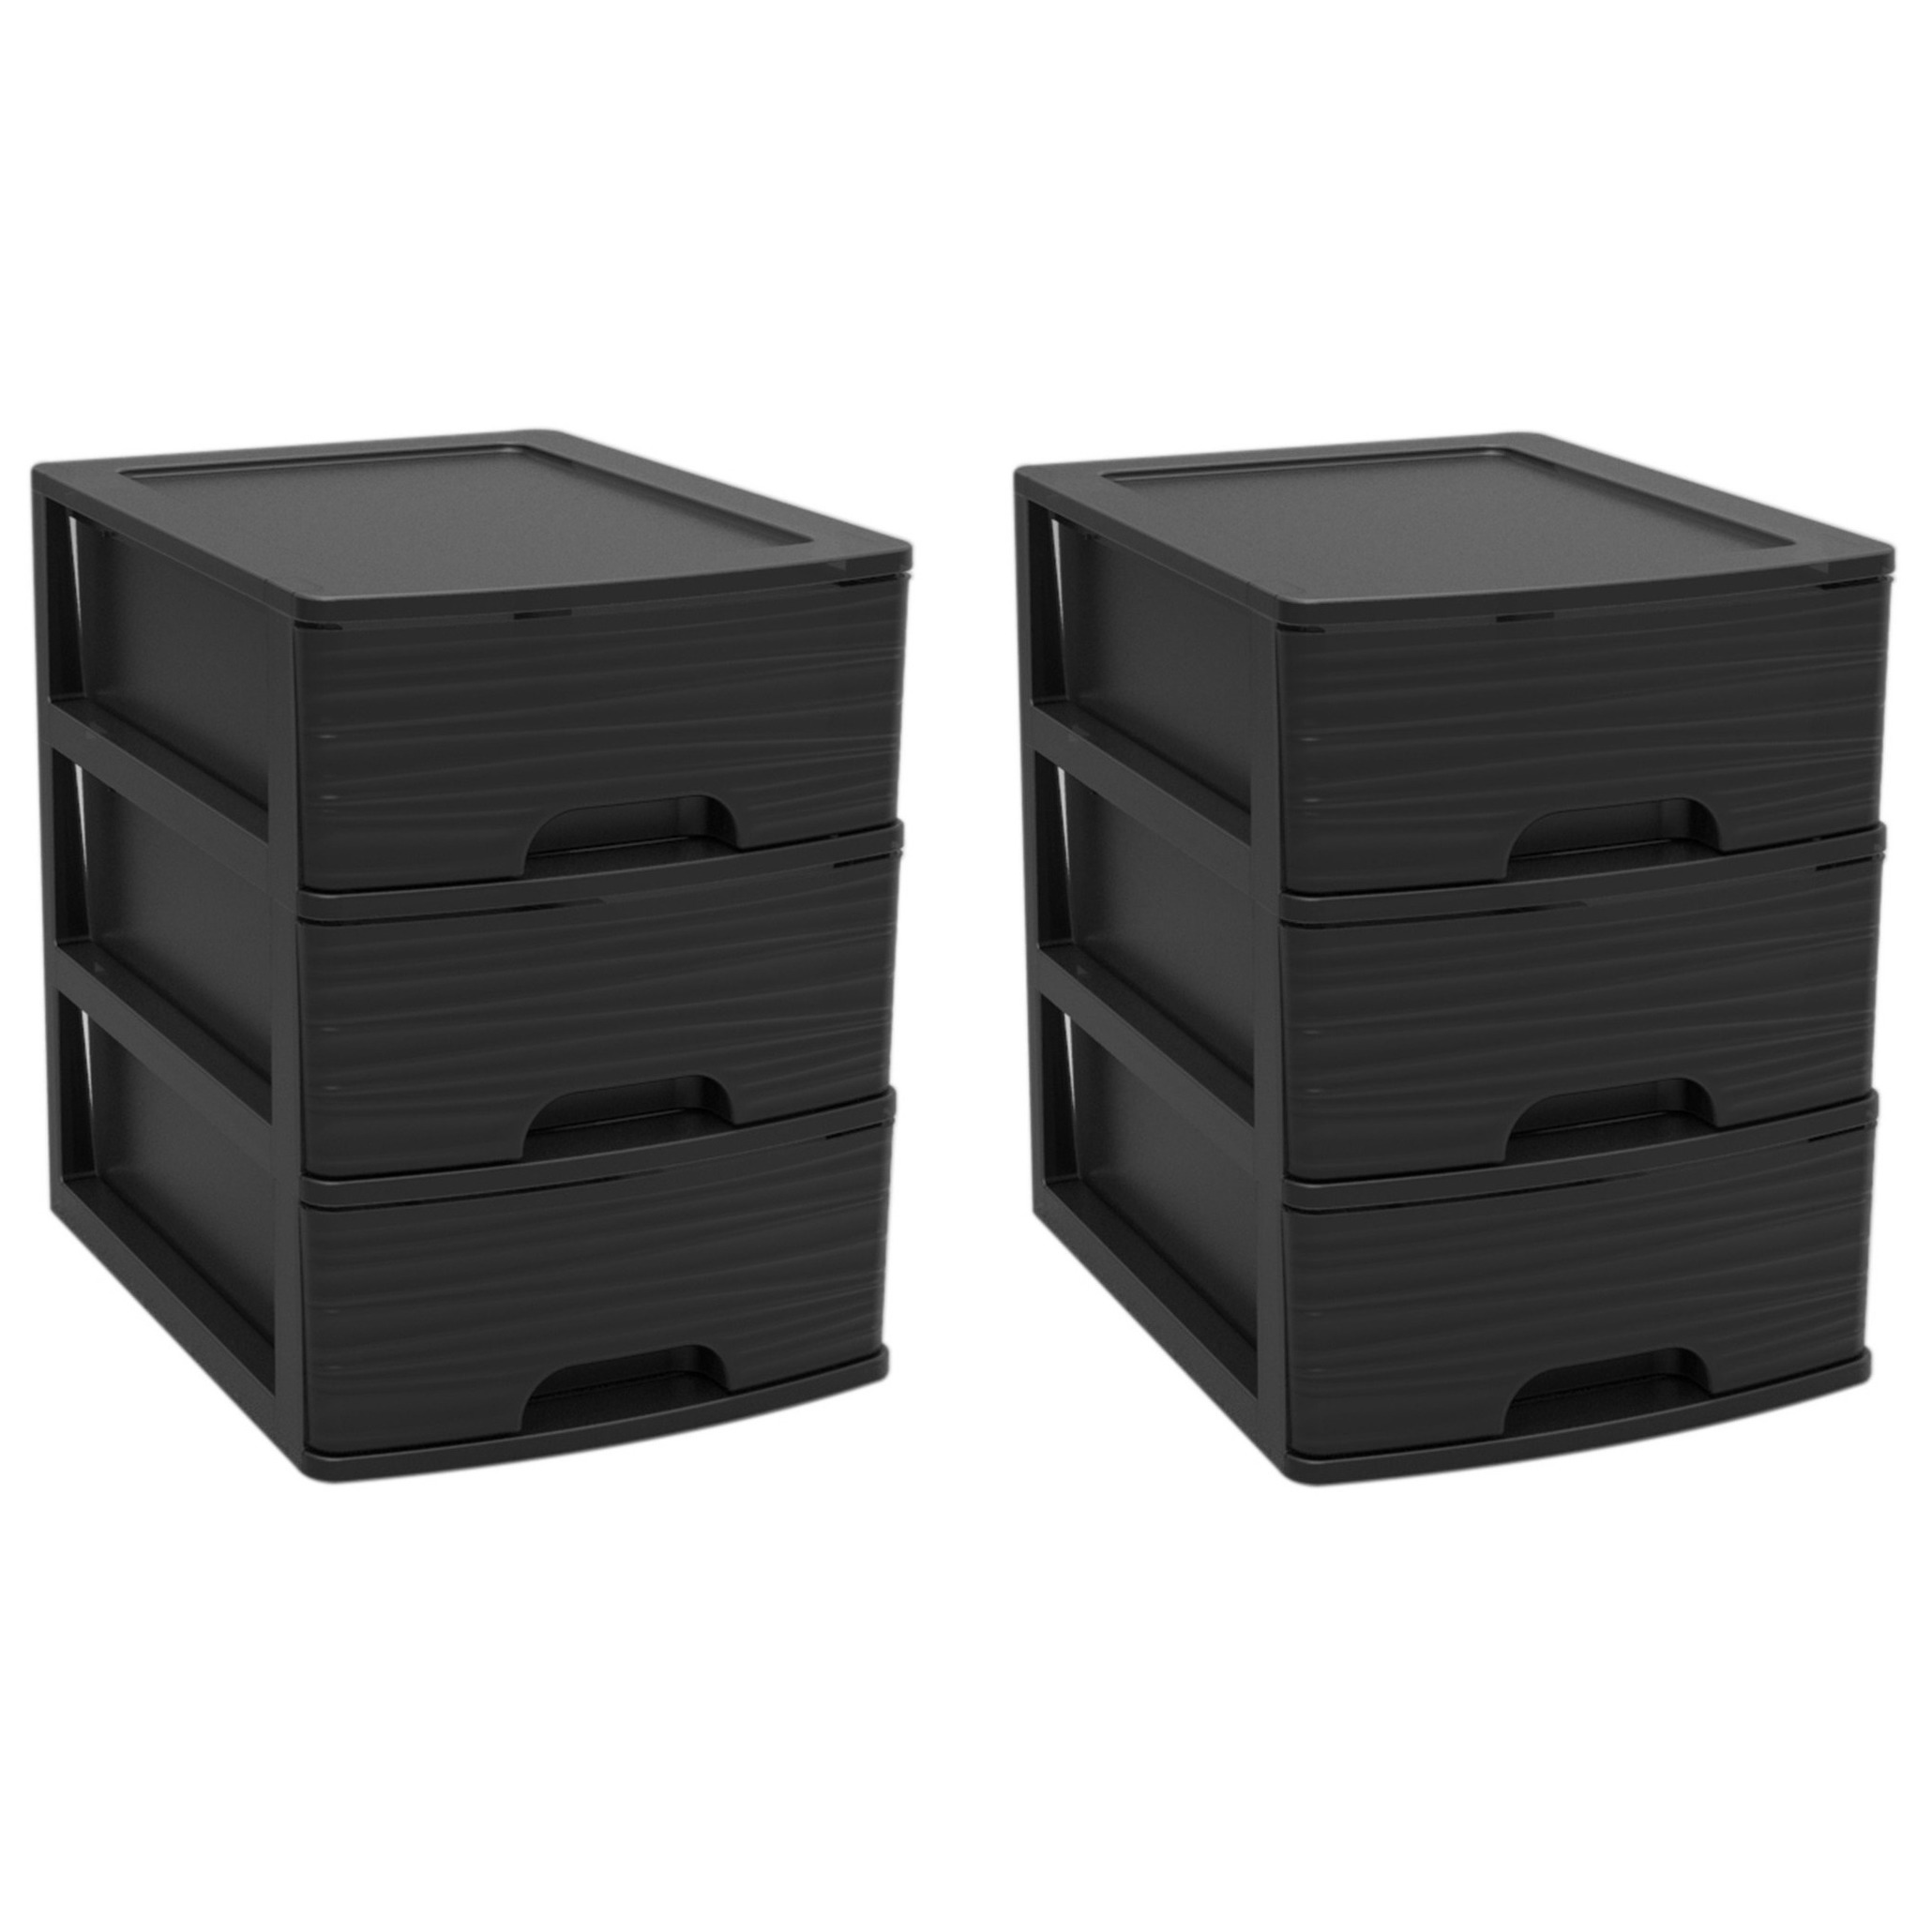 2x stuks ladenkast-bureau organizers zwart A5 3x lades stapelbaar L19 x B26 x H25 cm